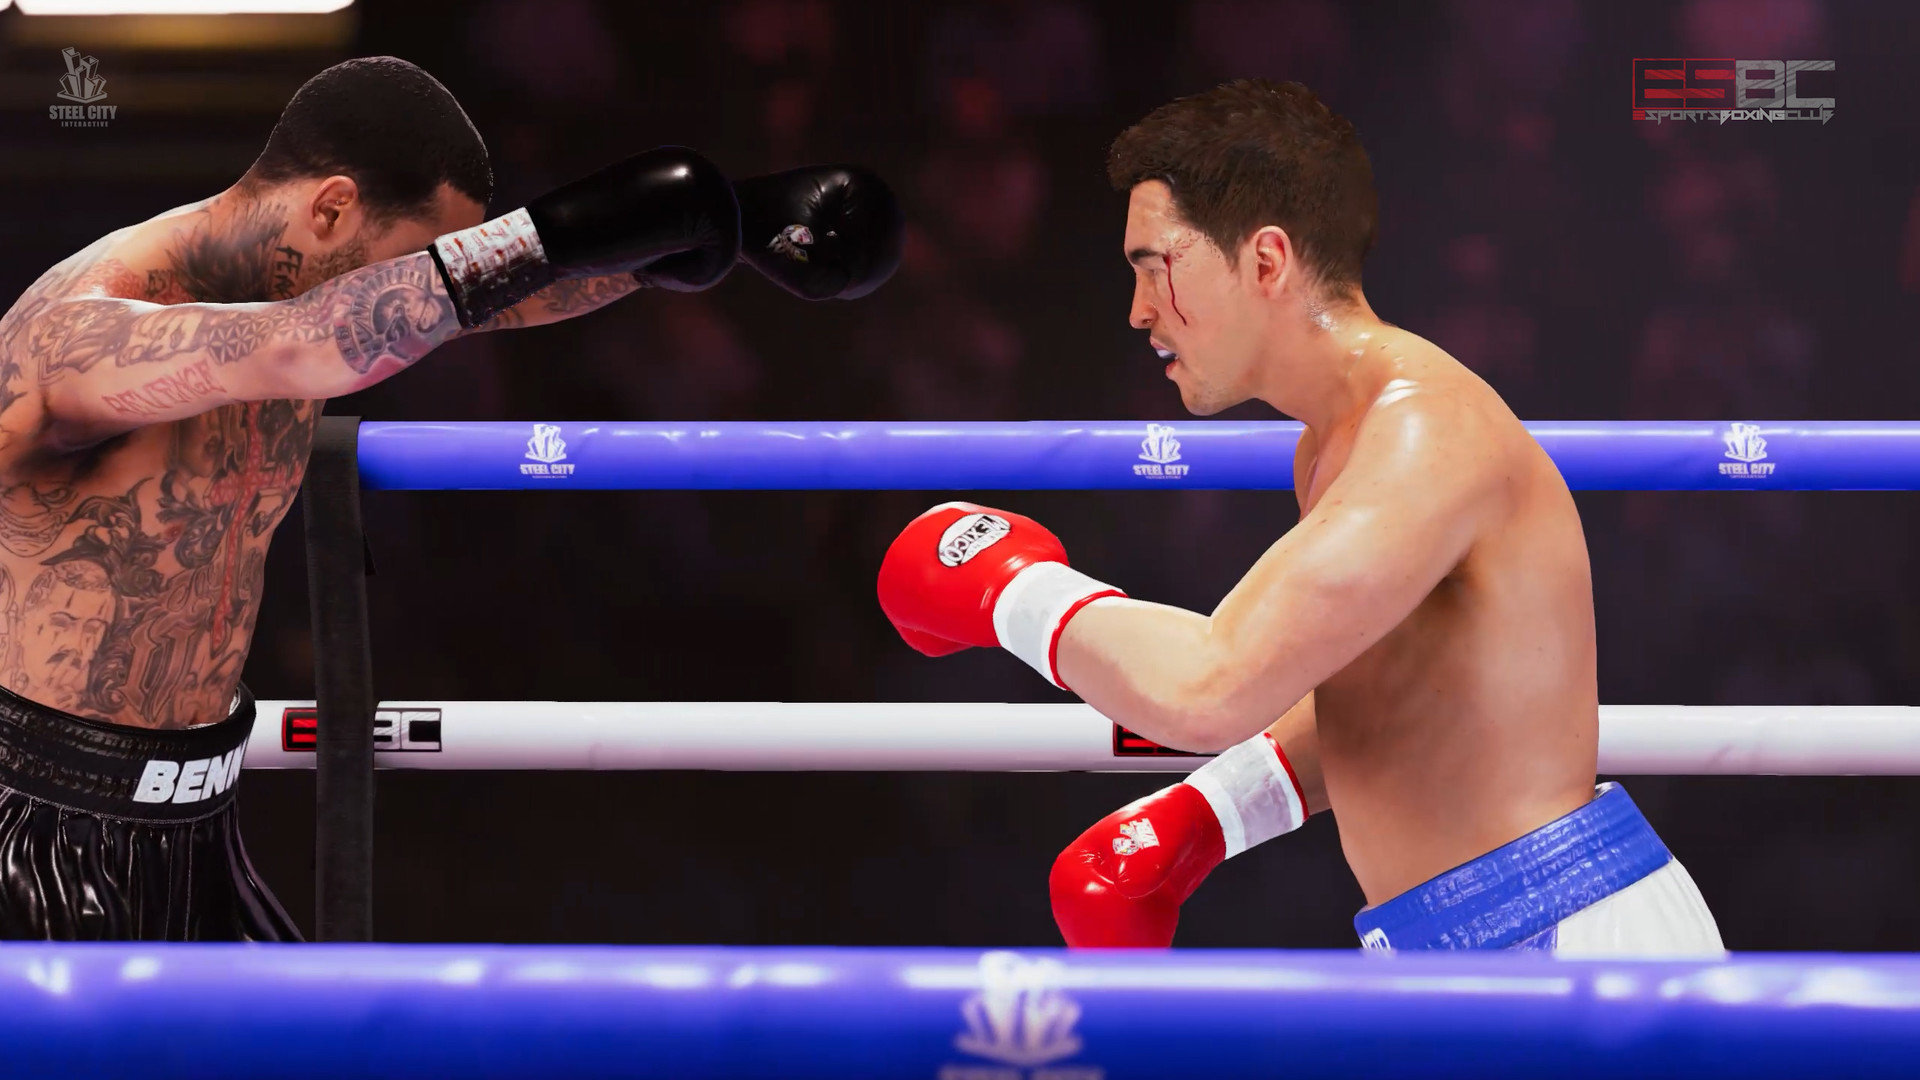 eSports Boxing Club图片